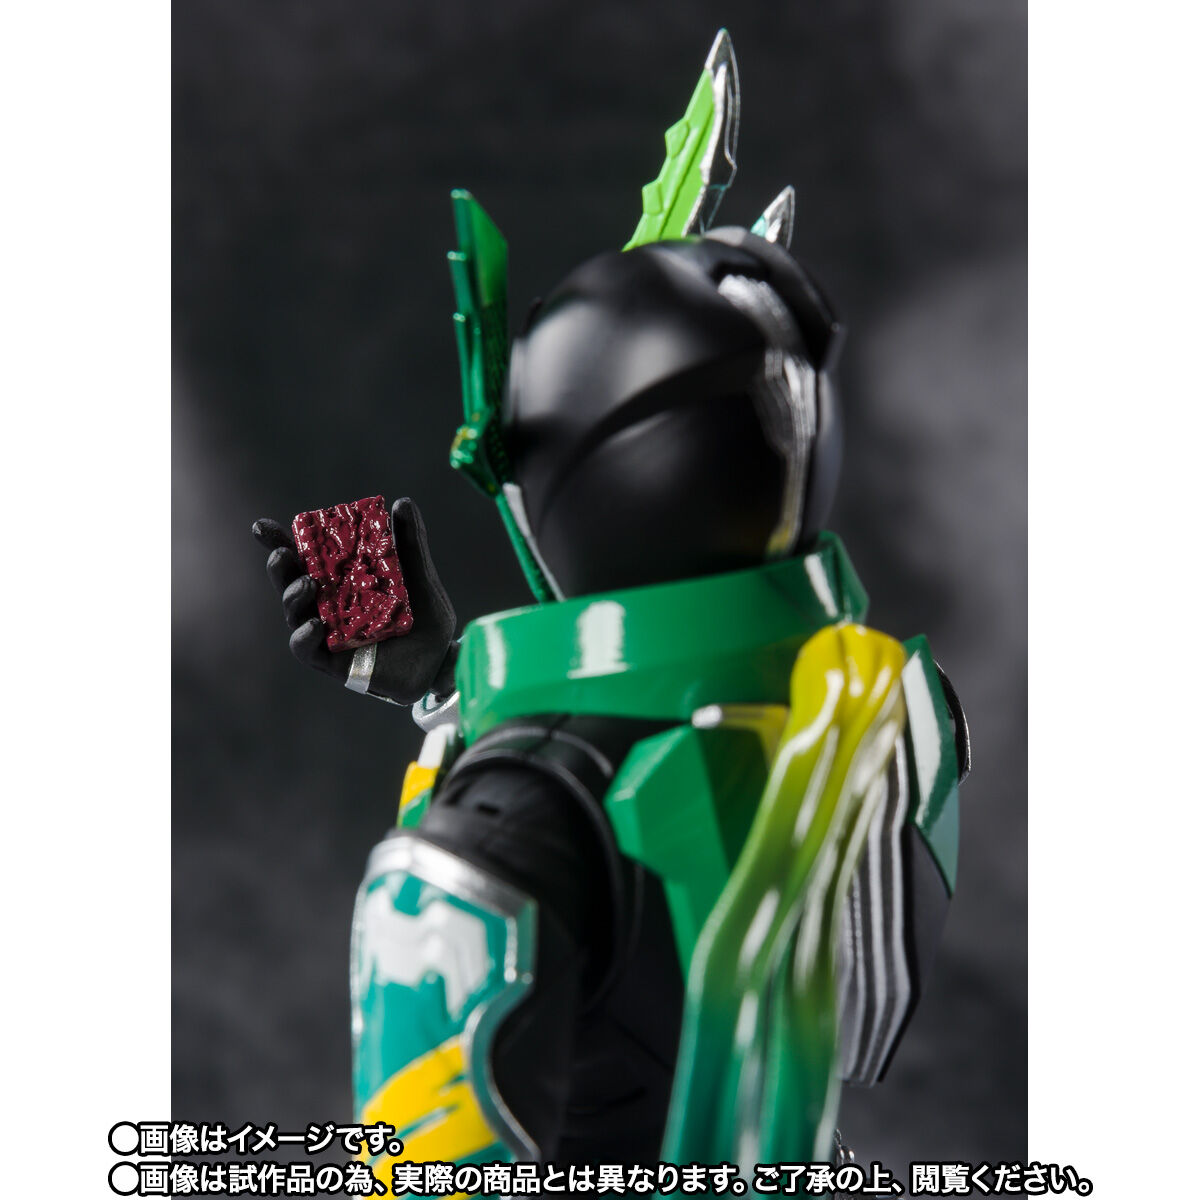 SH Figuarts Kamen Rider Kenzan